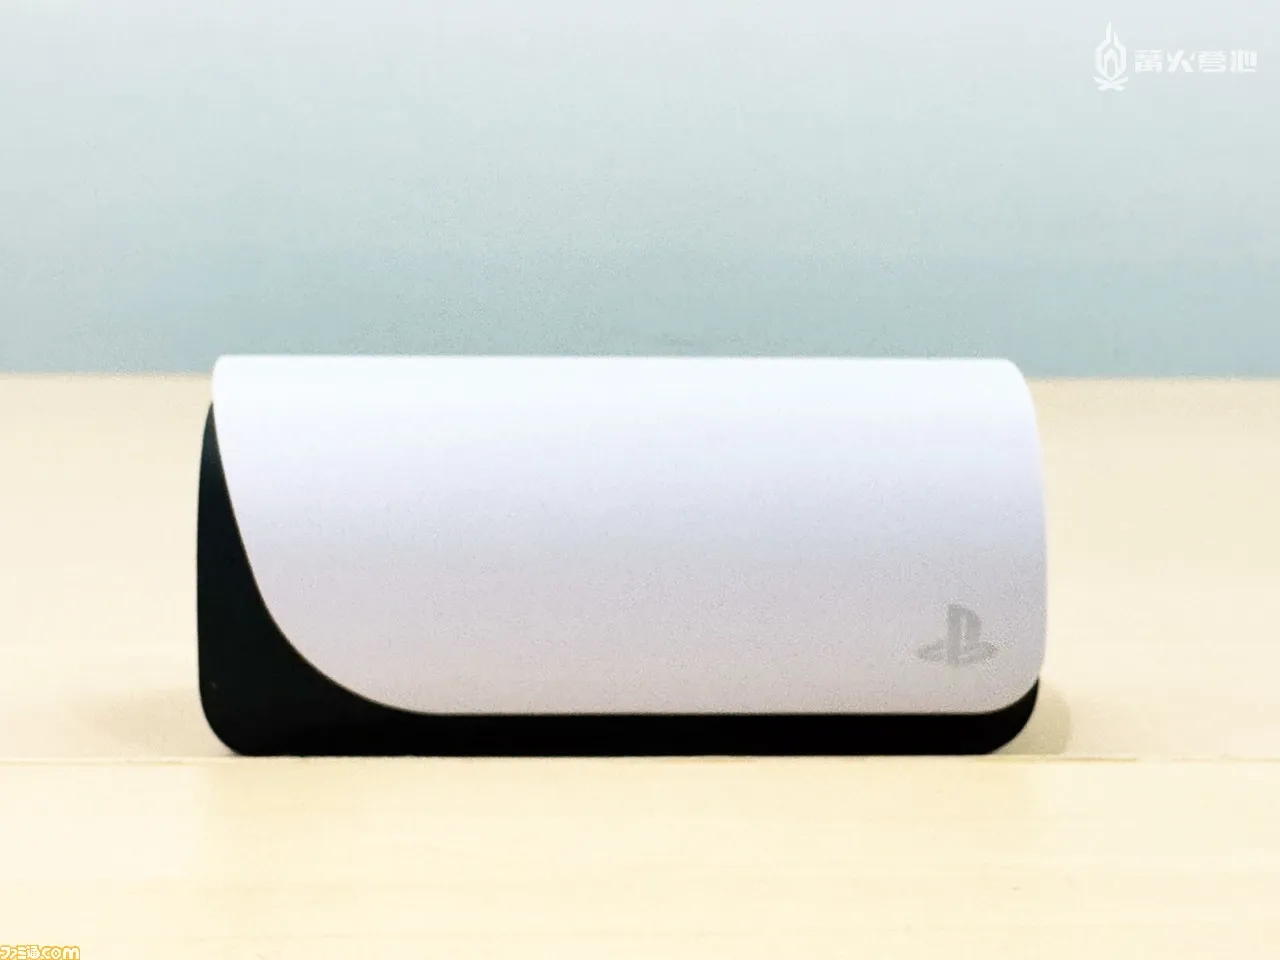 PlayStation Pulse Explore 耳機 Fami 通評測：有缺陷，但無可替代